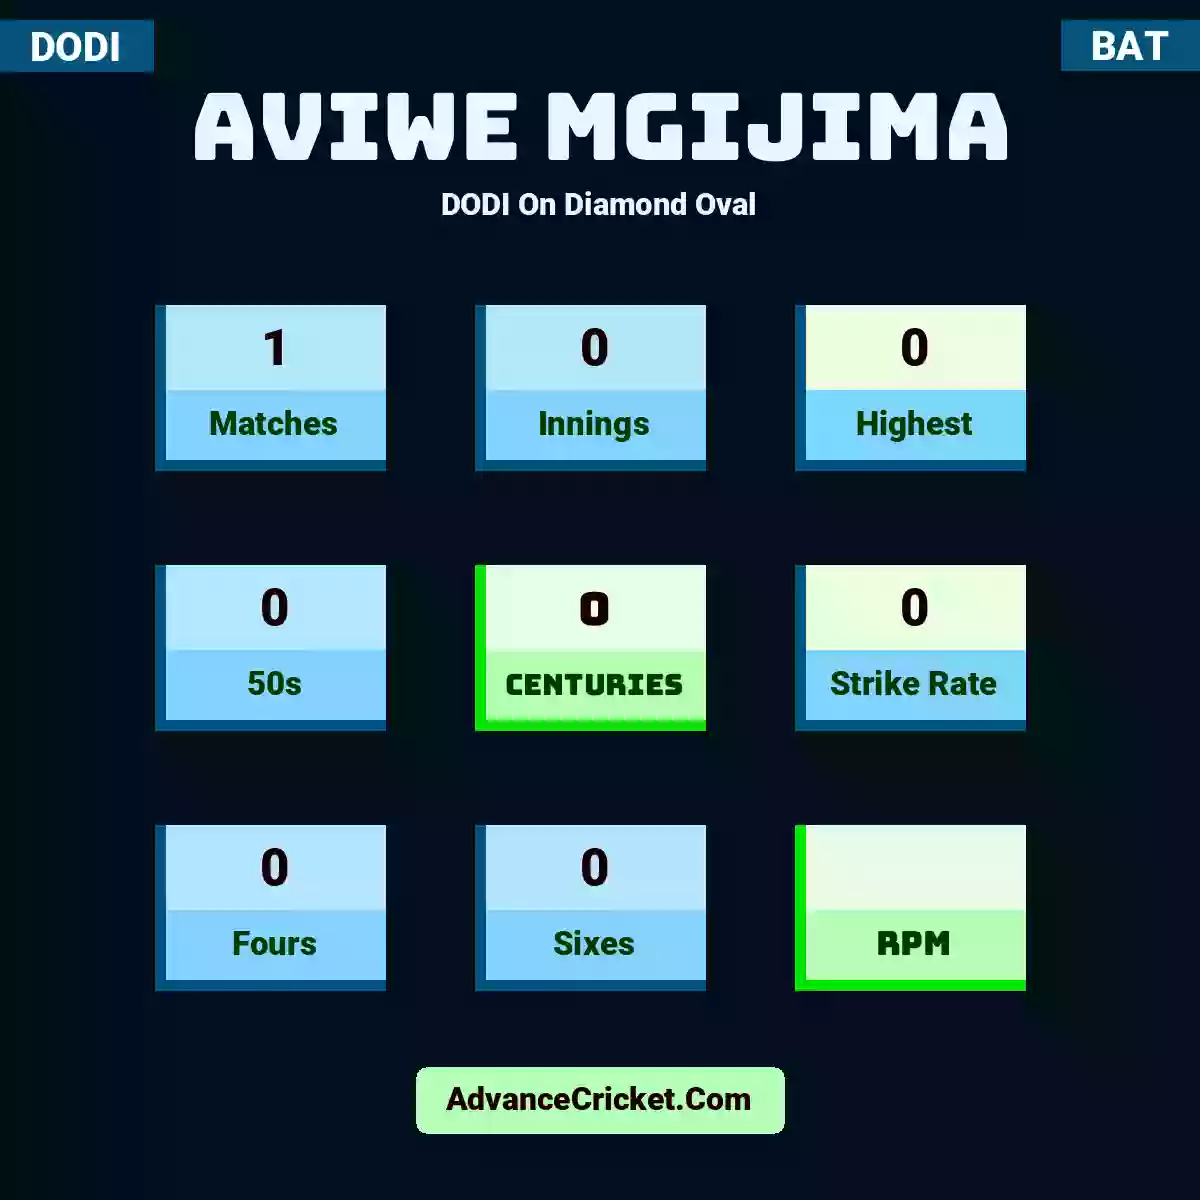 Aviwe Mgijima DODI  On Diamond Oval, Aviwe Mgijima played 1 matches, scored 0 runs as highest, 0 half-centuries, and 0 centuries, with a strike rate of 0. A.Mgijima hit 0 fours and 0 sixes.